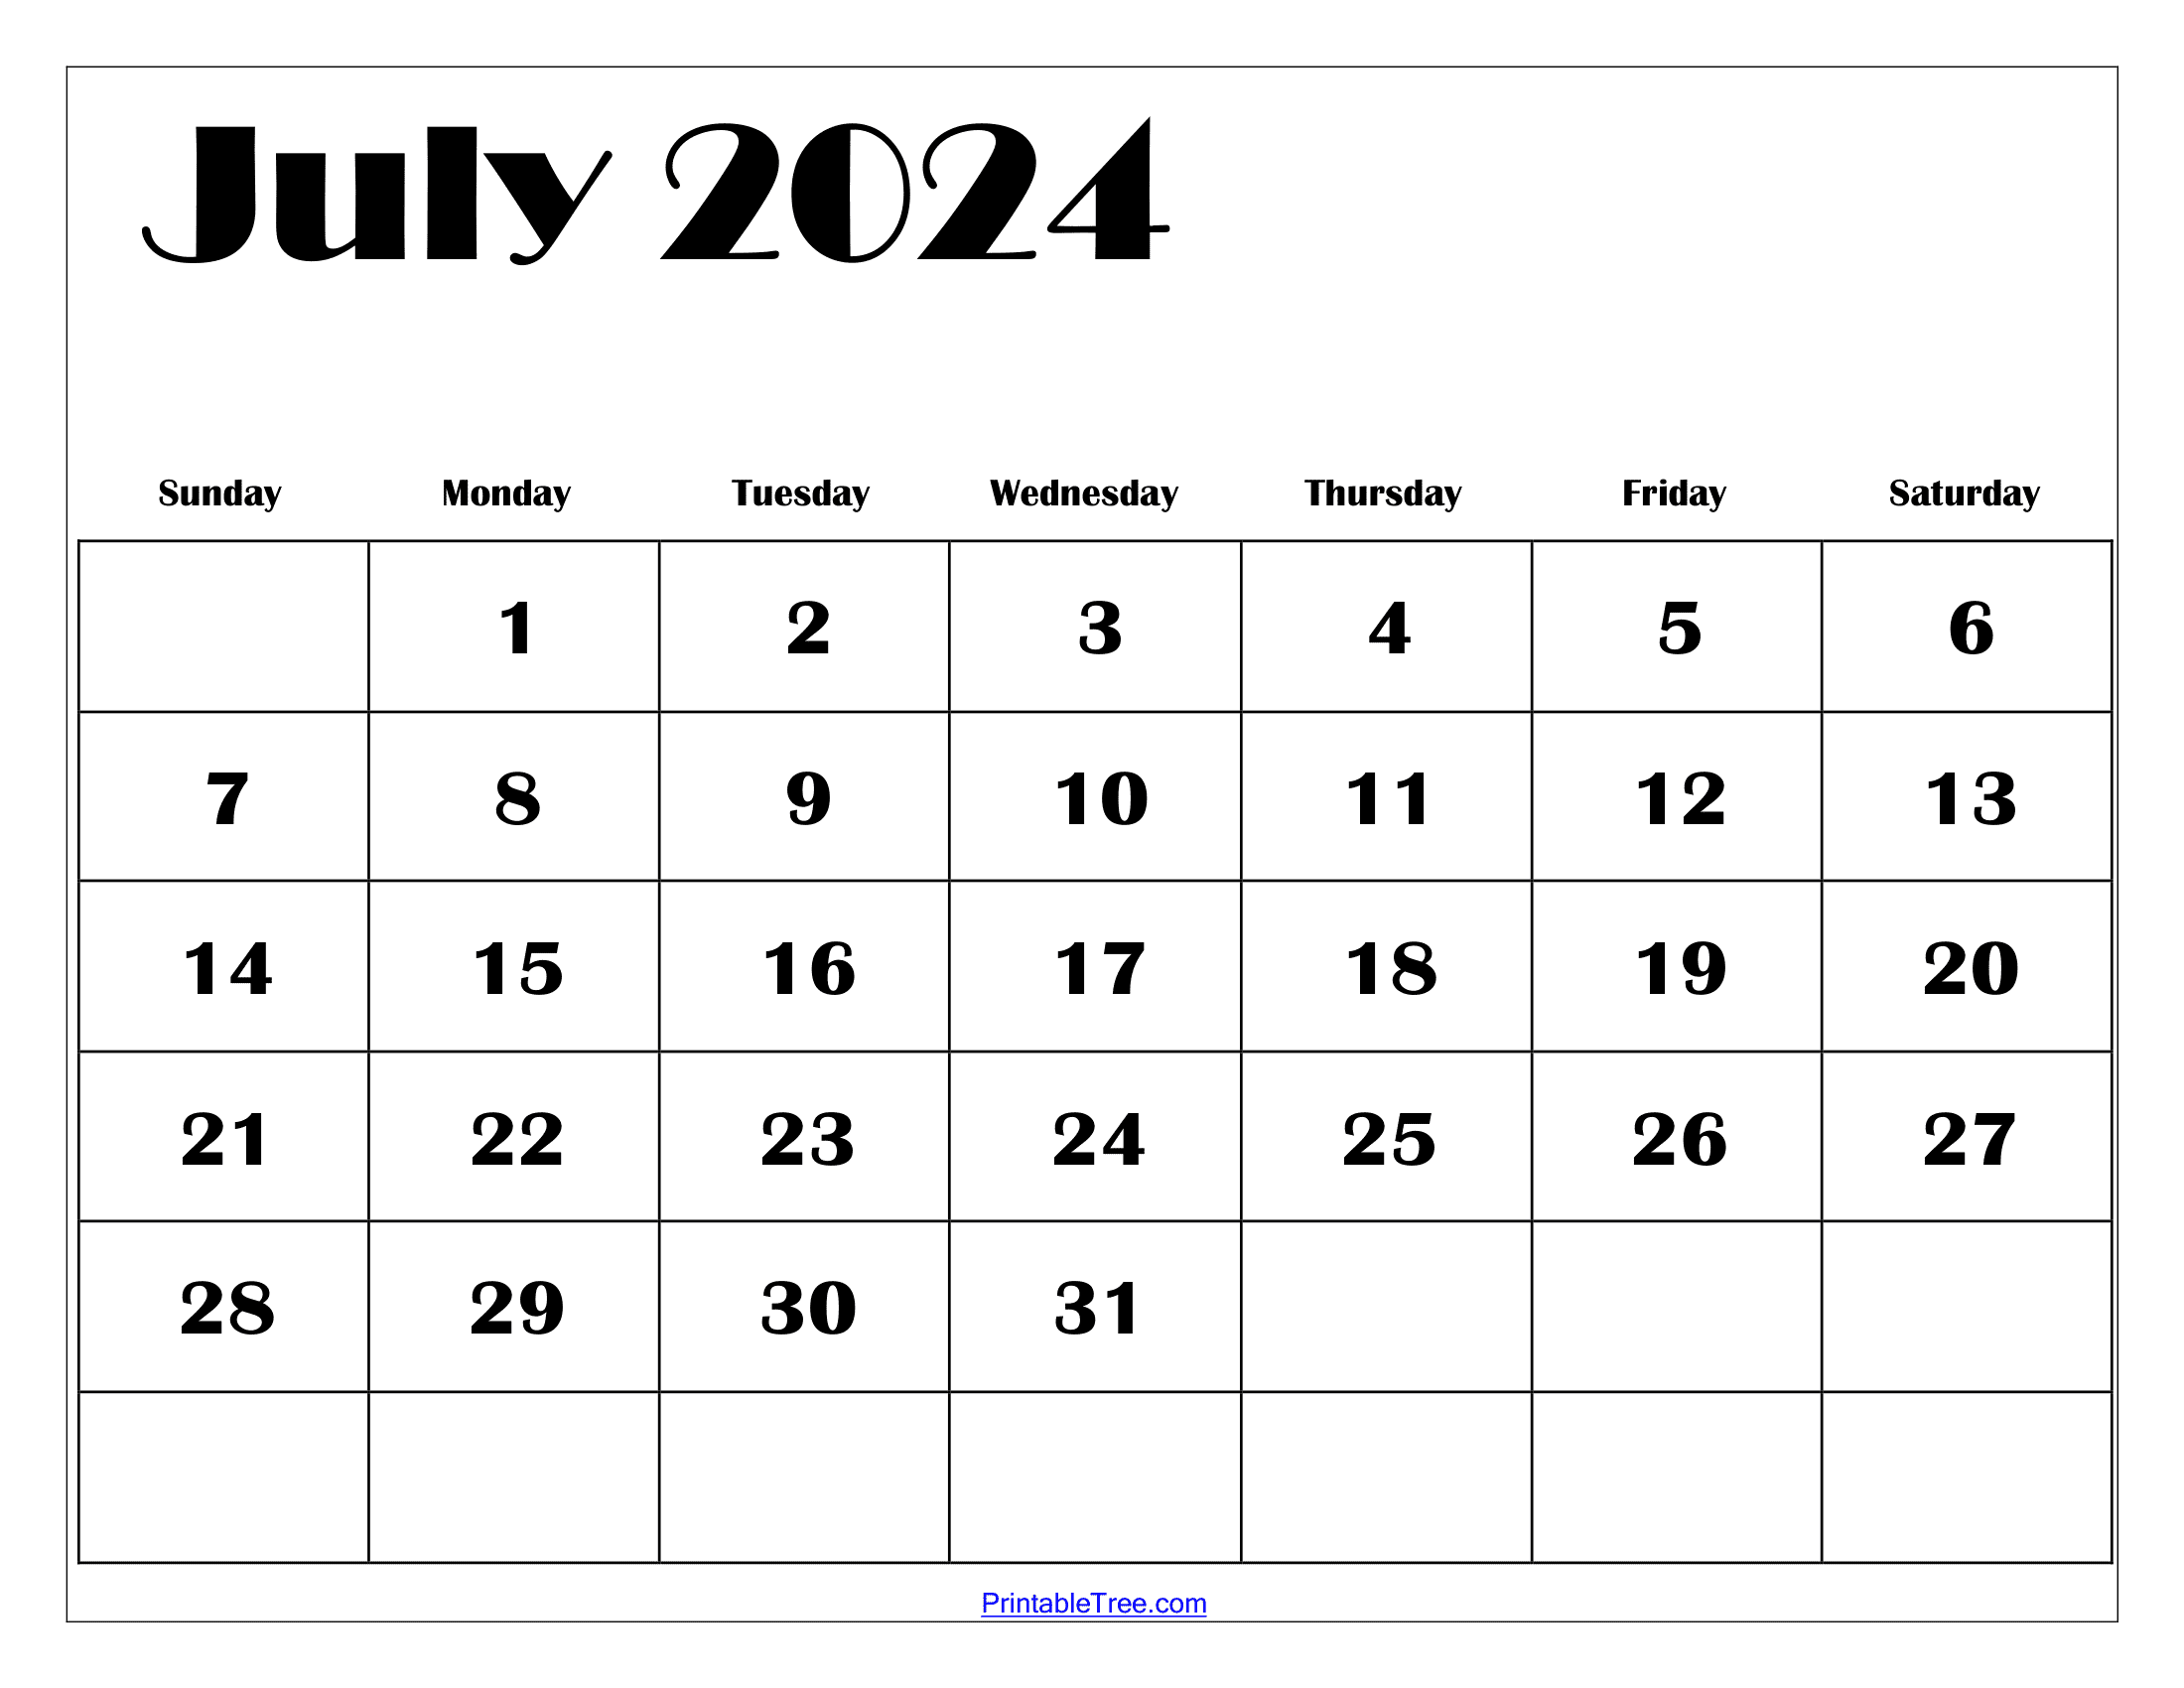 July 2024 Calendar Printable Pdf With Holidays Free Template for July 2024 Blank Printable Calendar